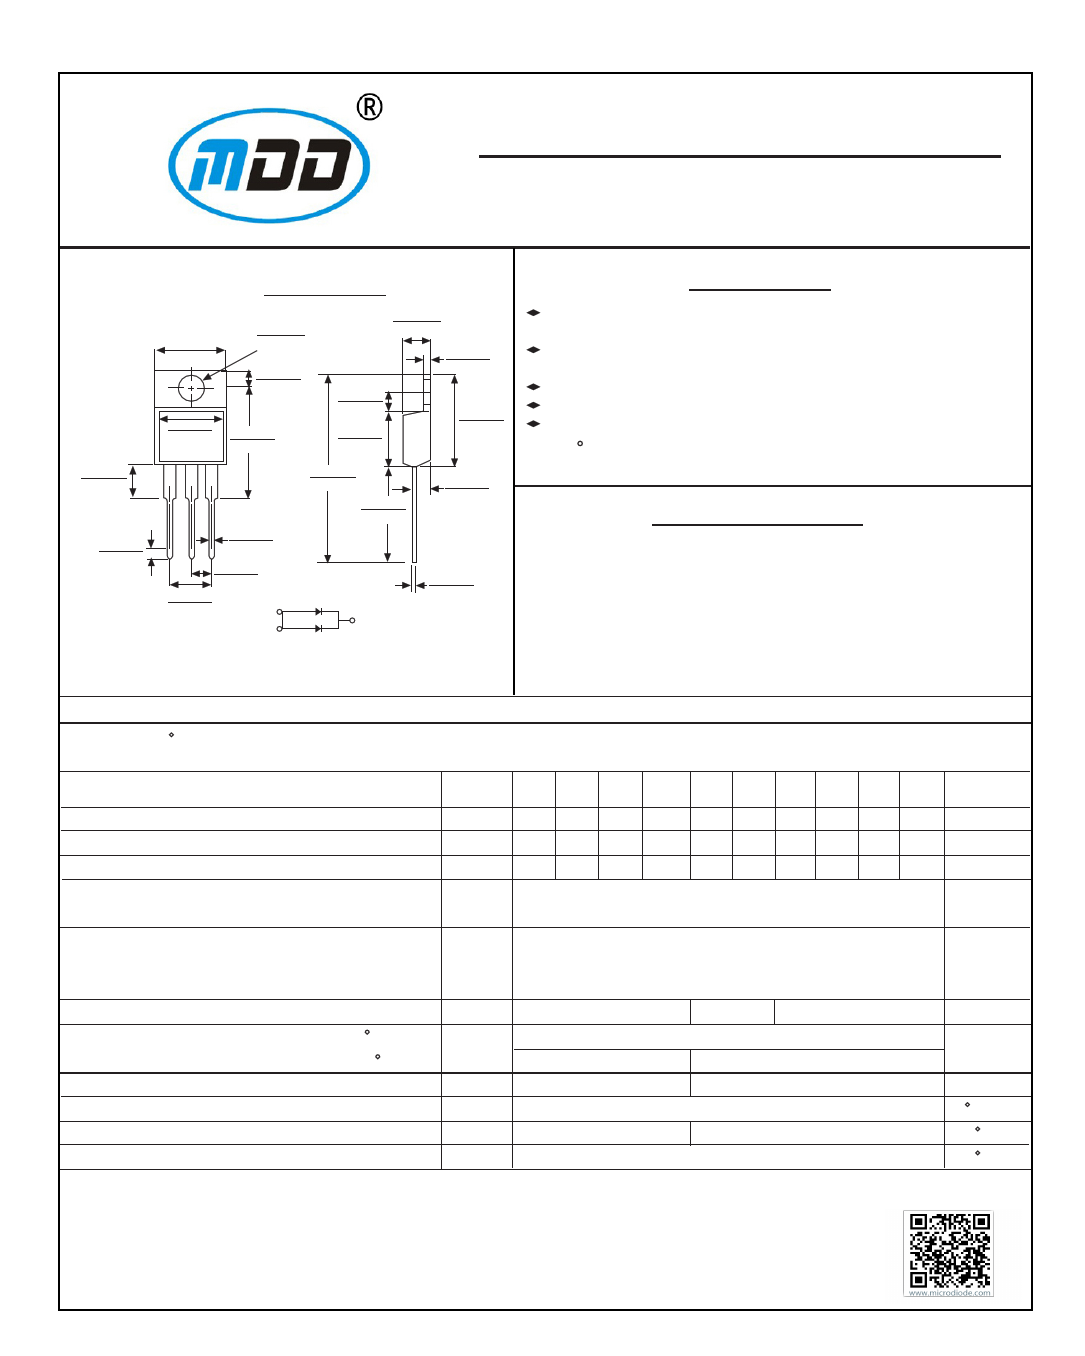 MBR1590CT Datasheet, MBR1590CT PDF,ピン配置, 機能